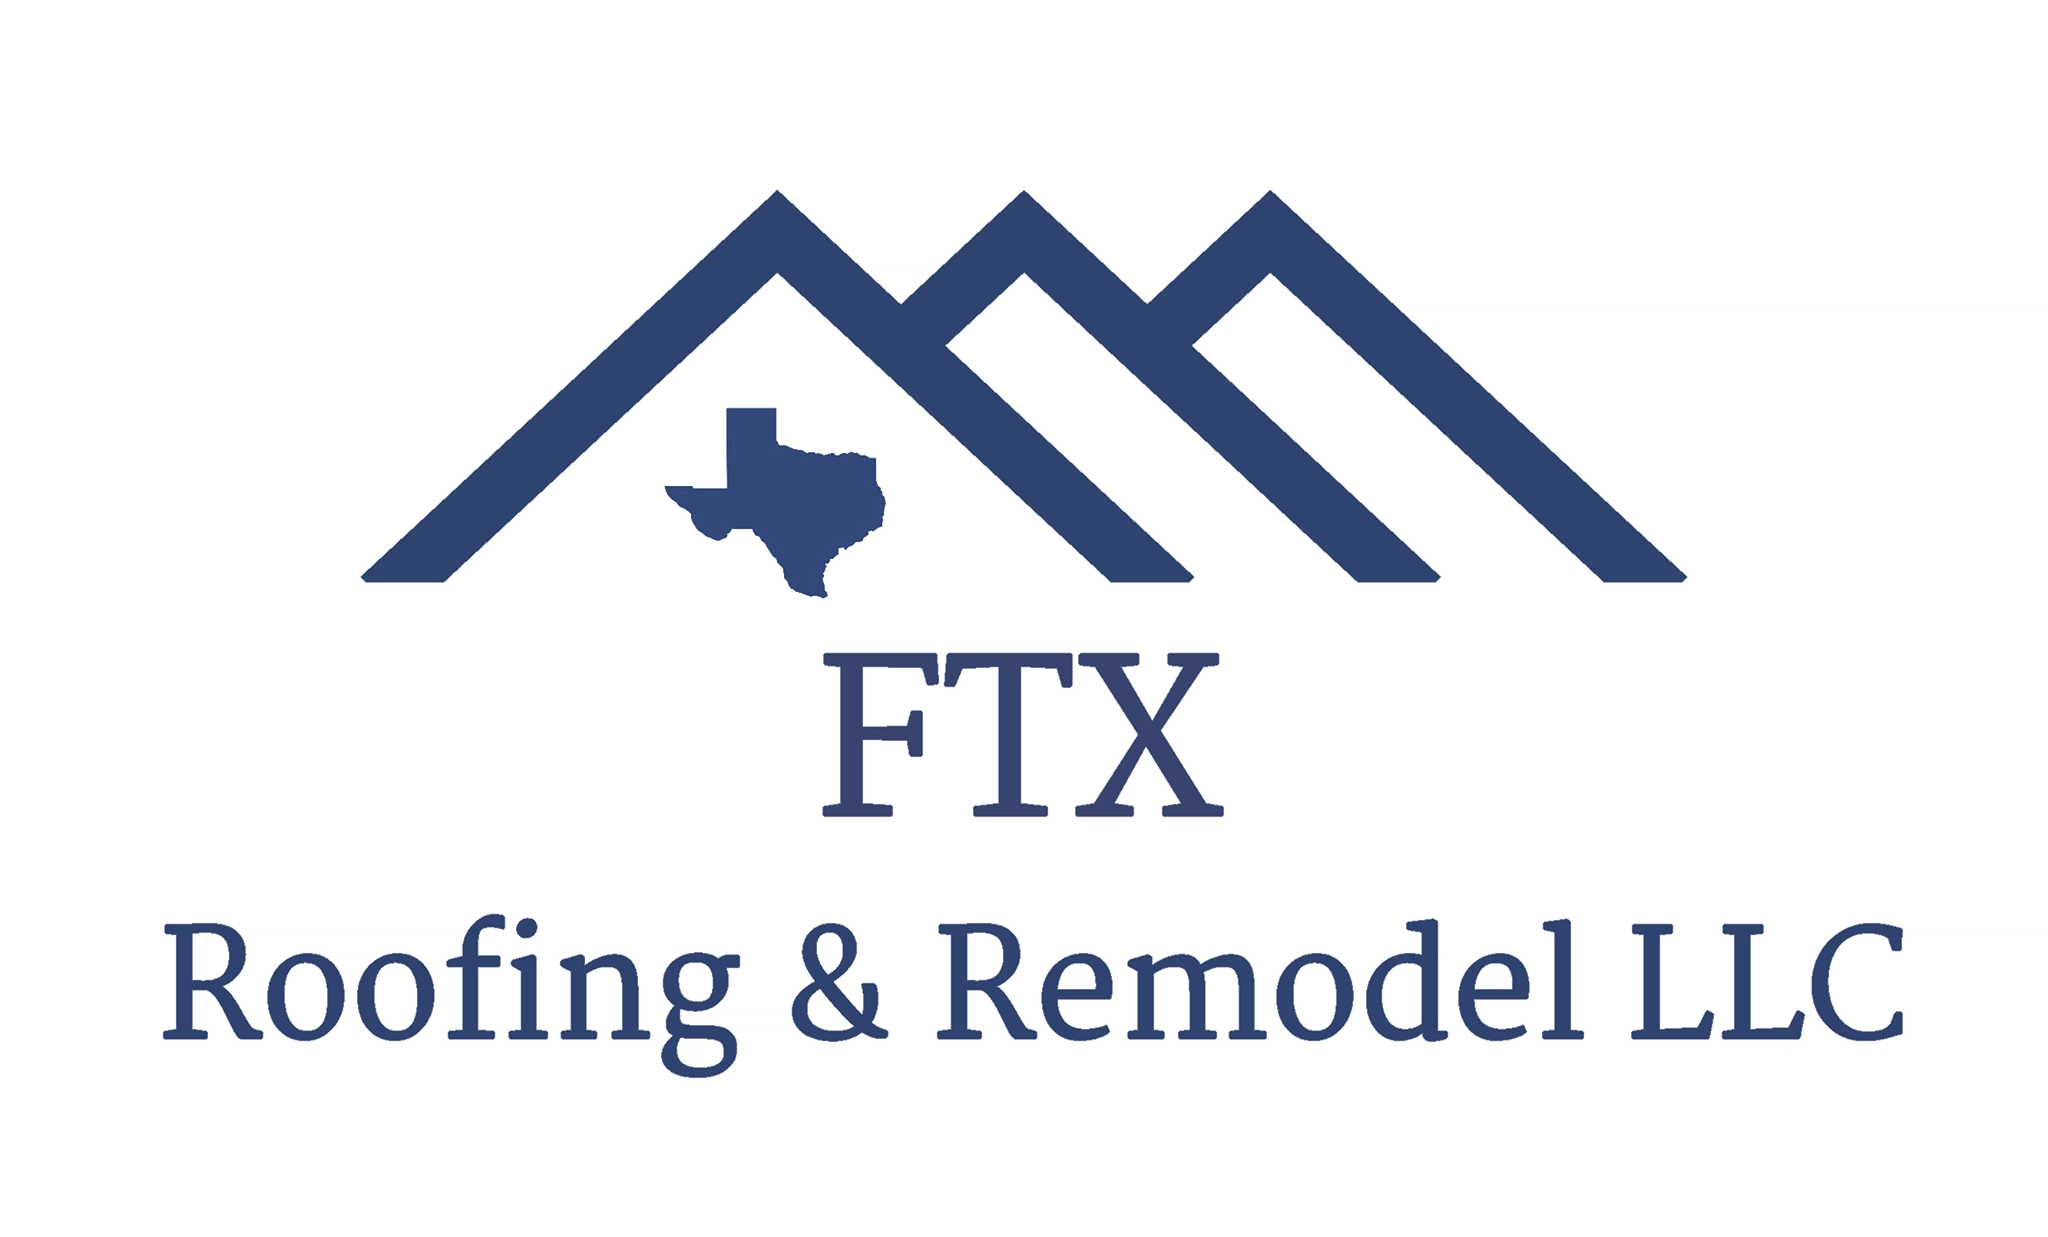 FTX Roofing & Remodel Logo